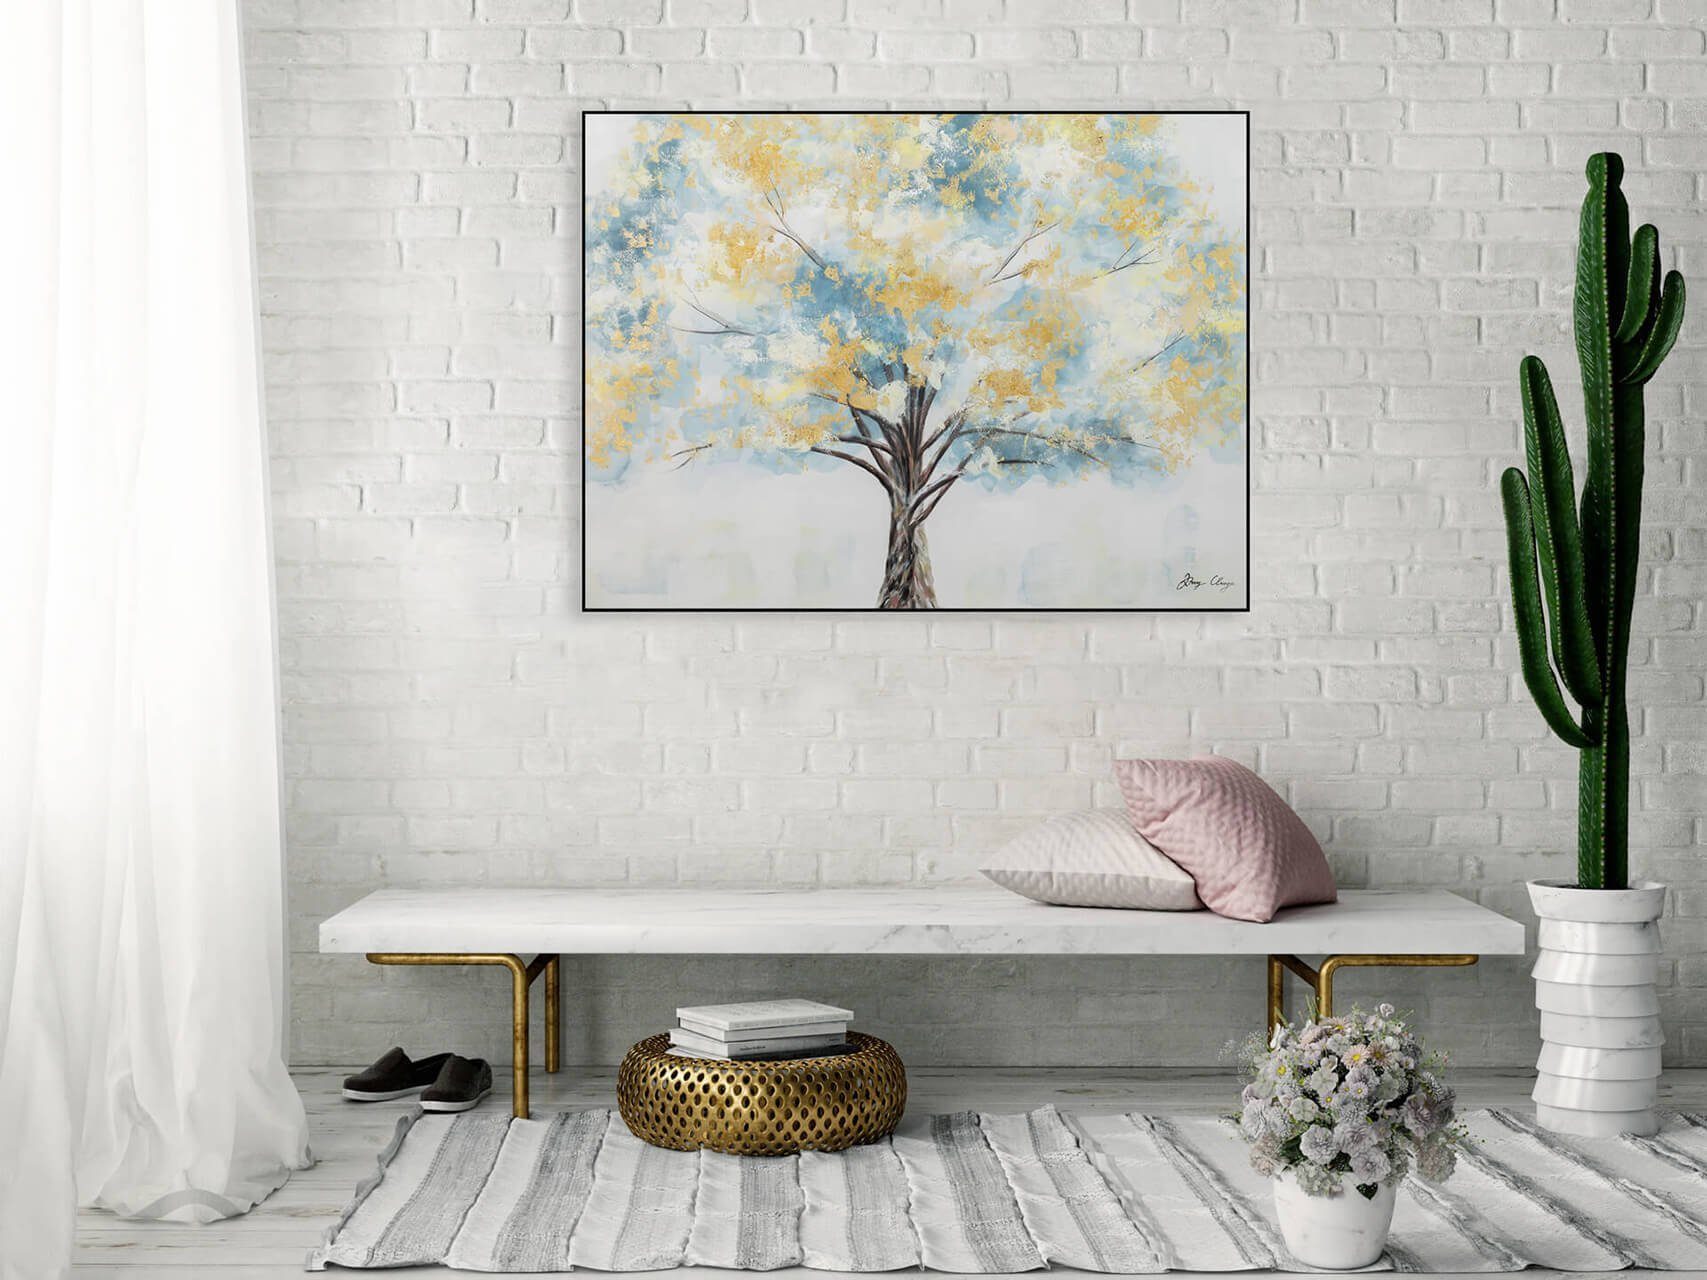 Leinwandbild Blooming HANDGEMALT Gemälde 100% Wohnzimmer Wandbild KUNSTLOFT 100x75 Giant cm,